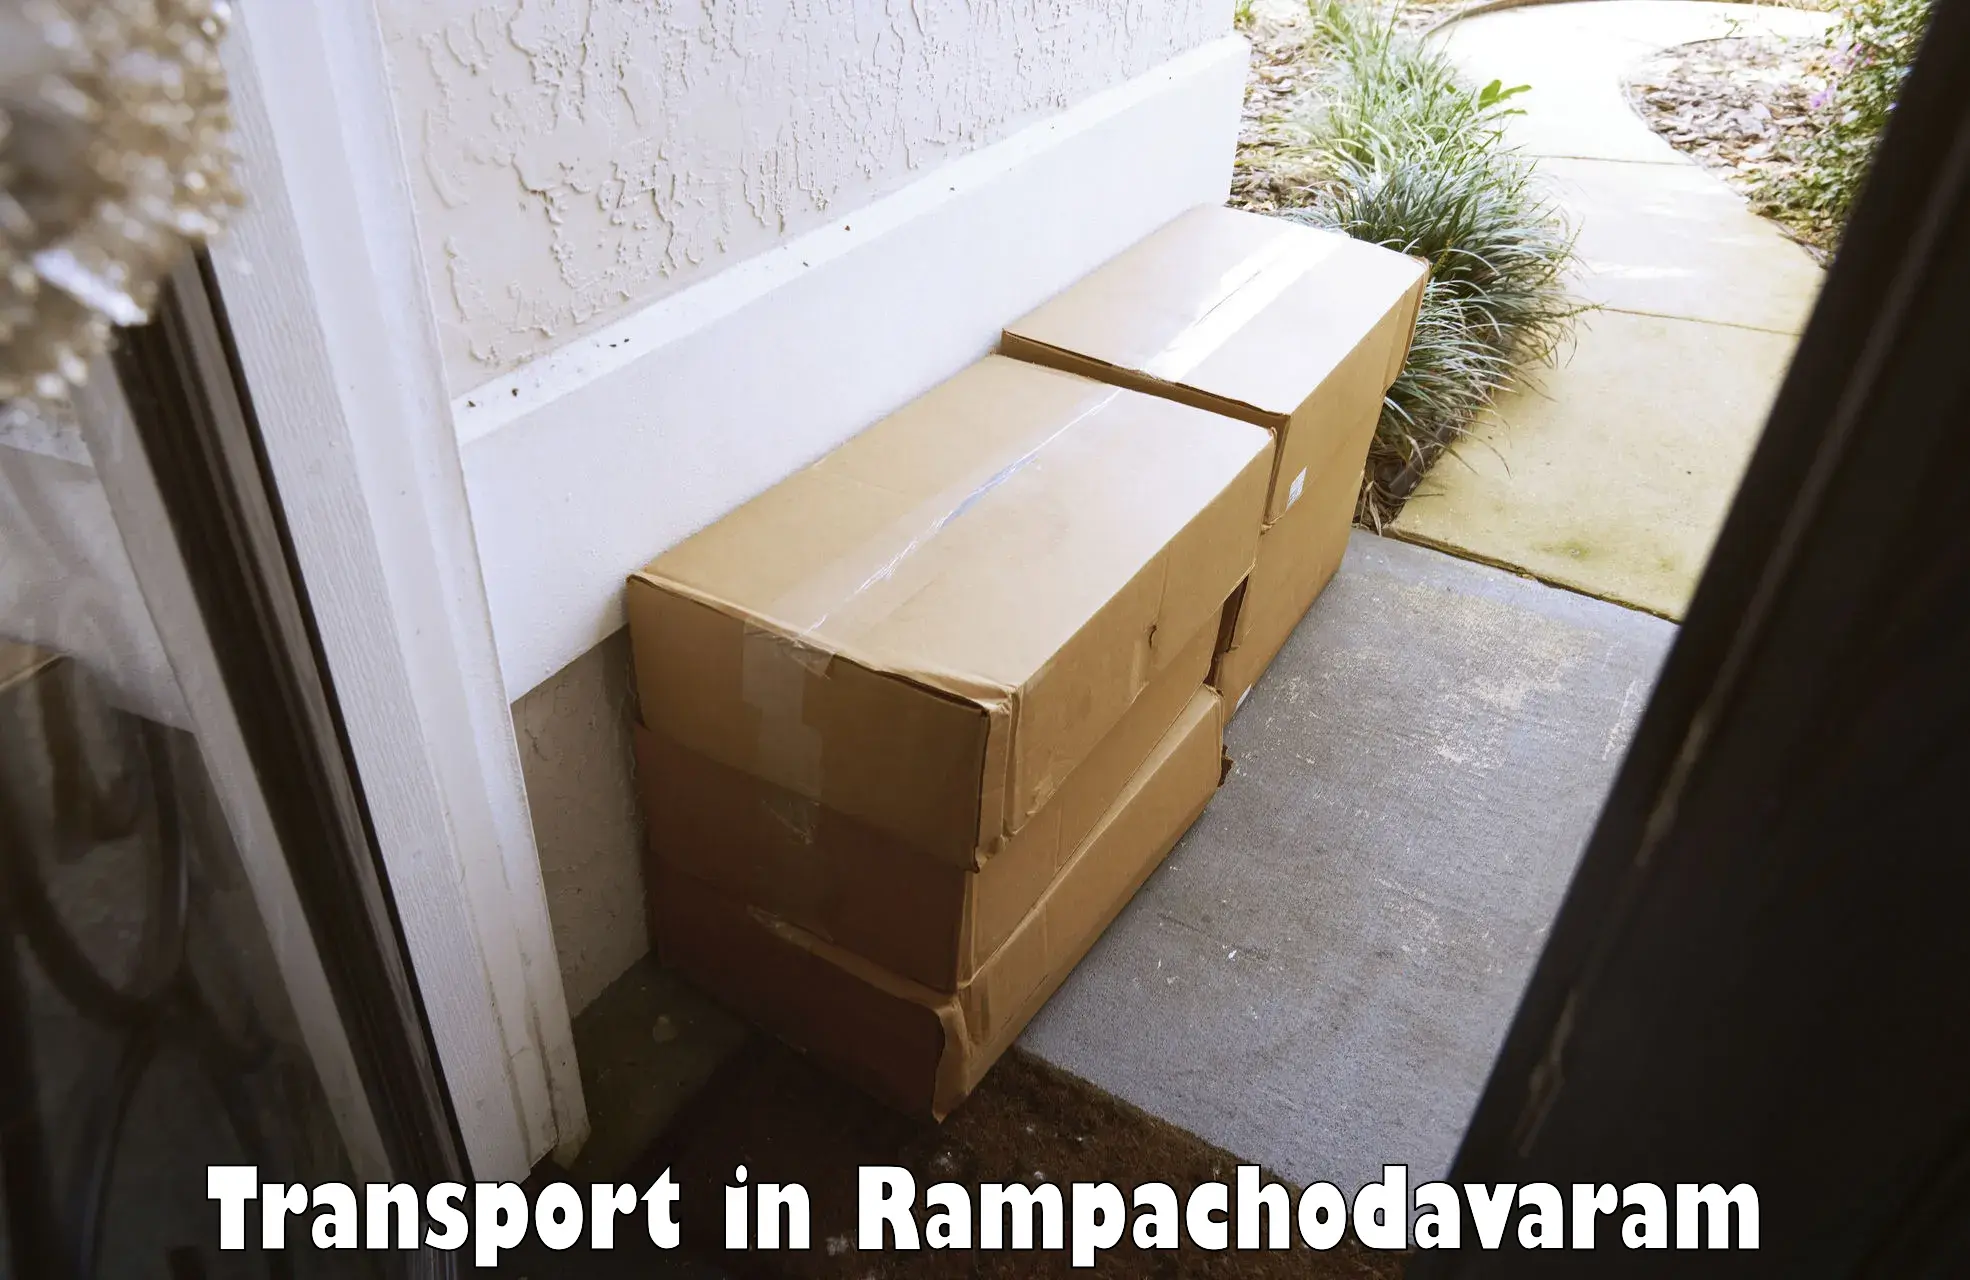 Parcel transport services in Rampachodavaram